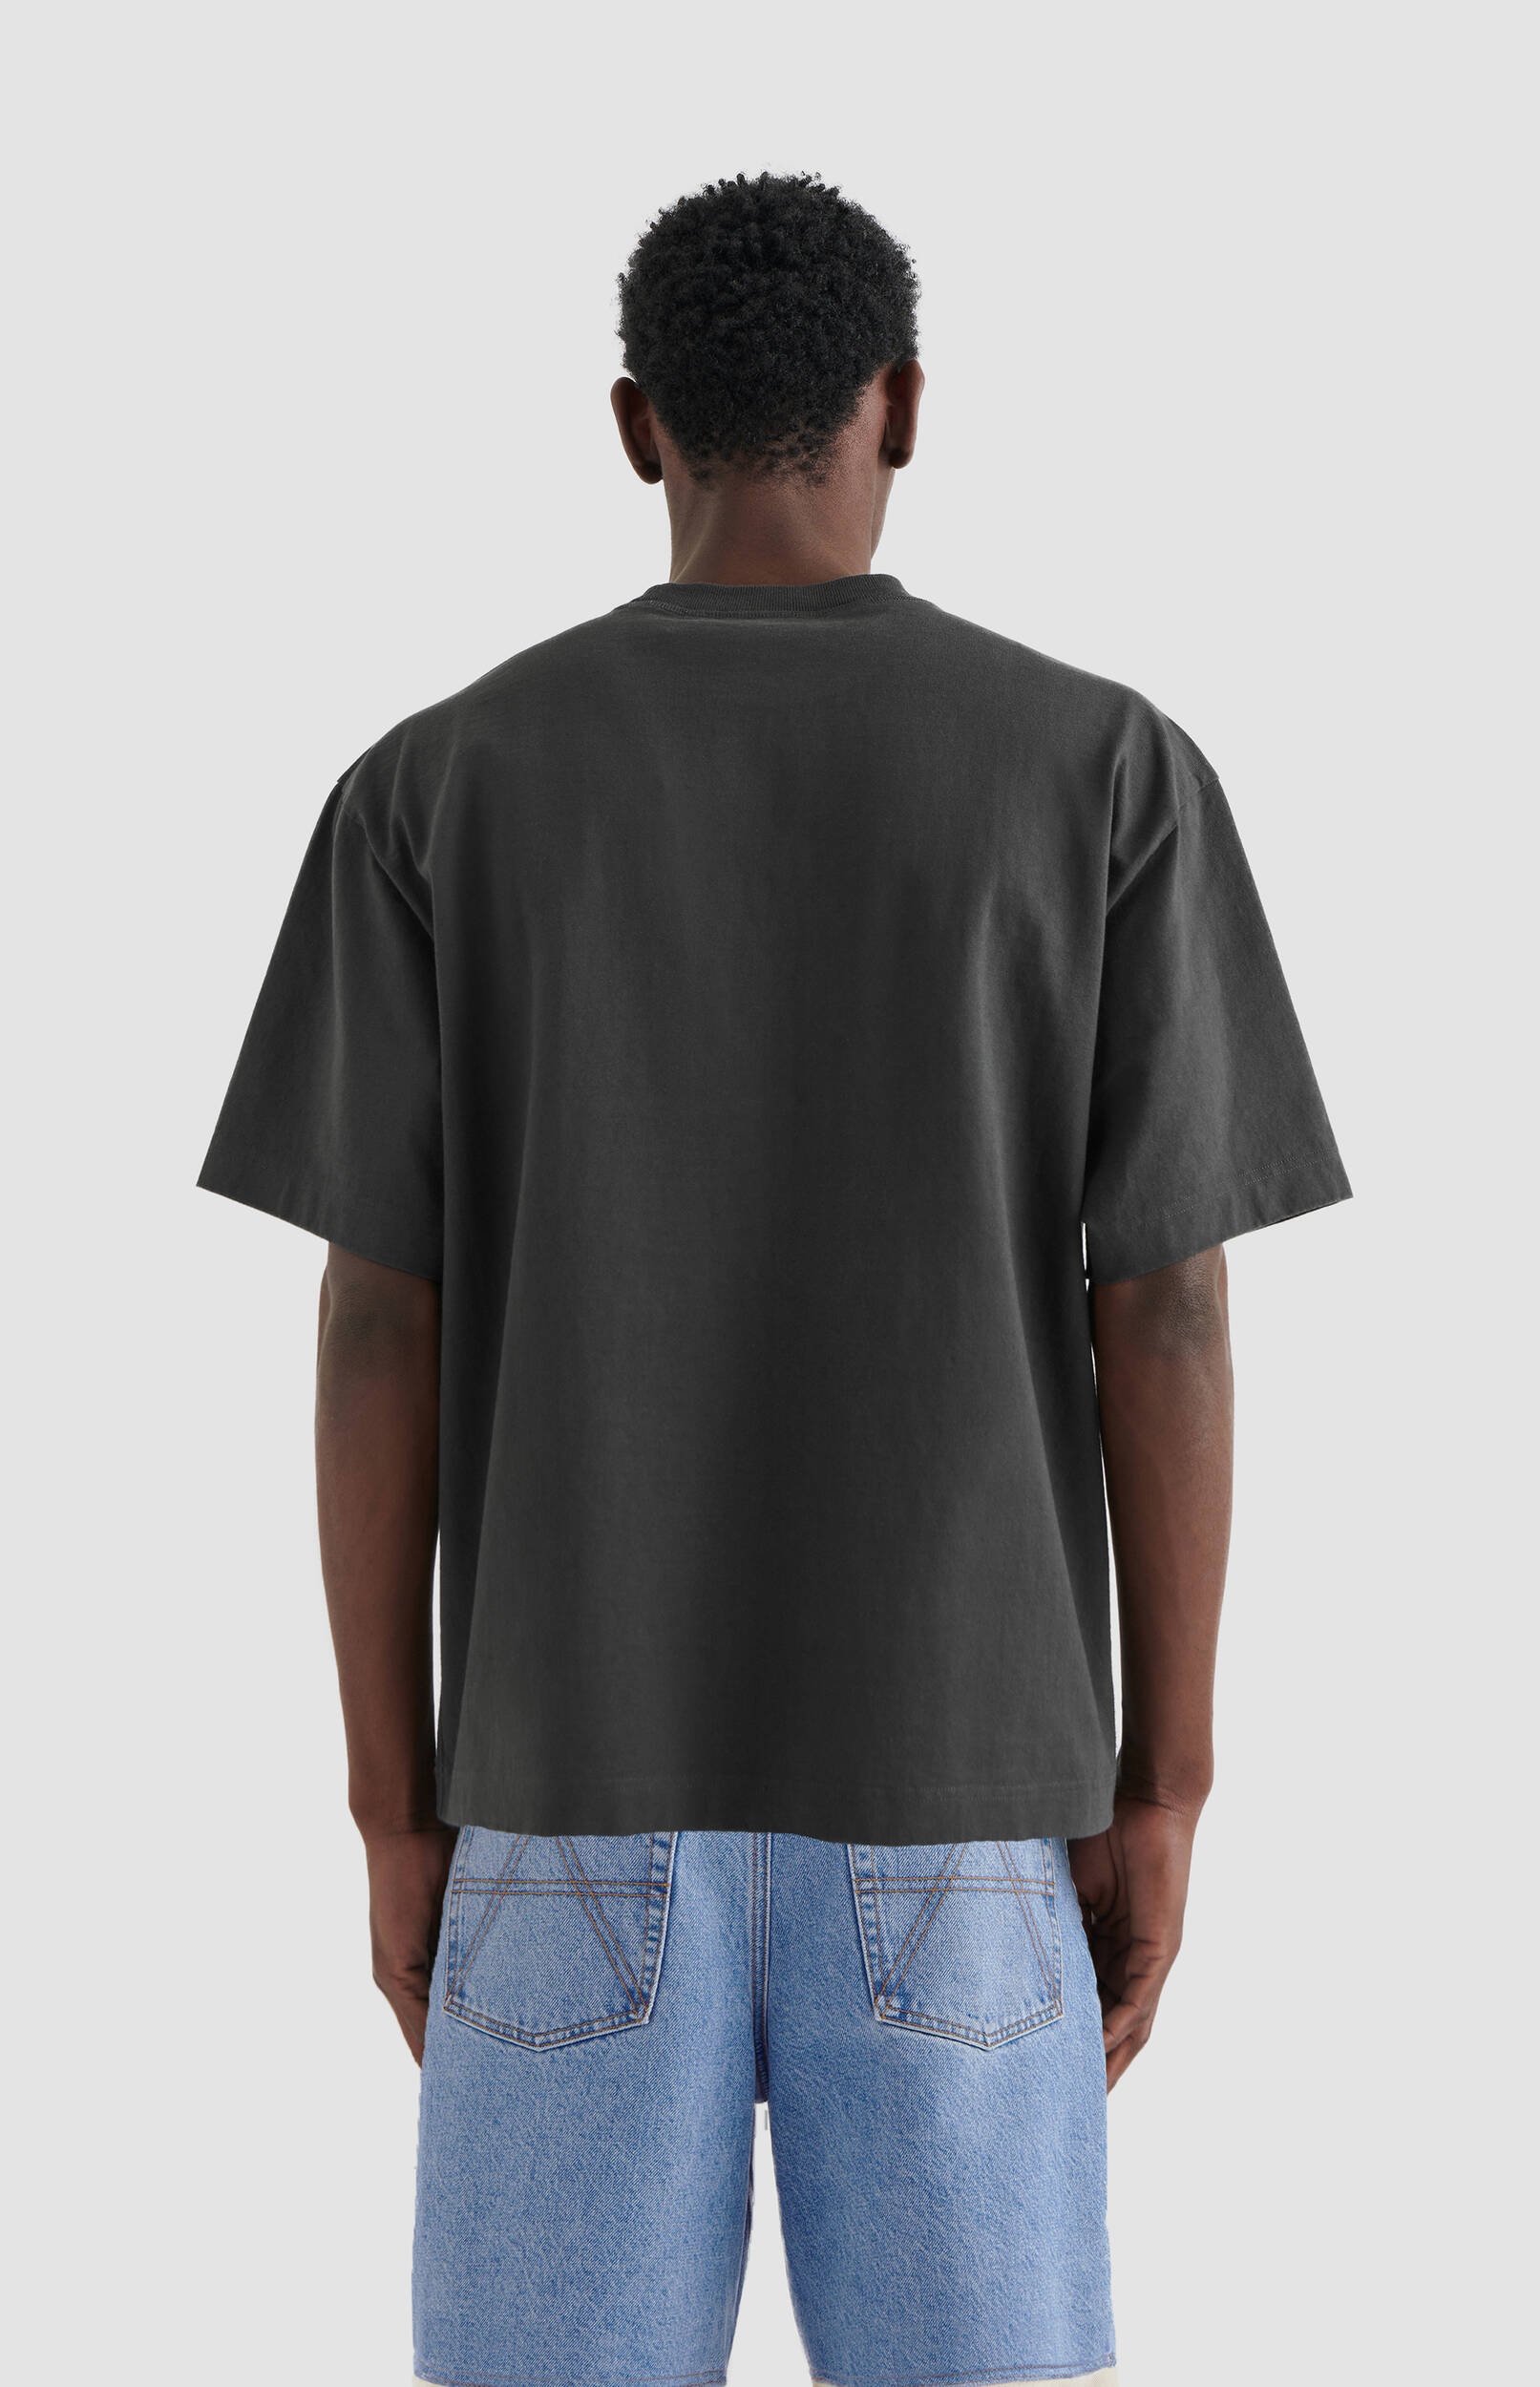 Sketch T-Shirt - 3